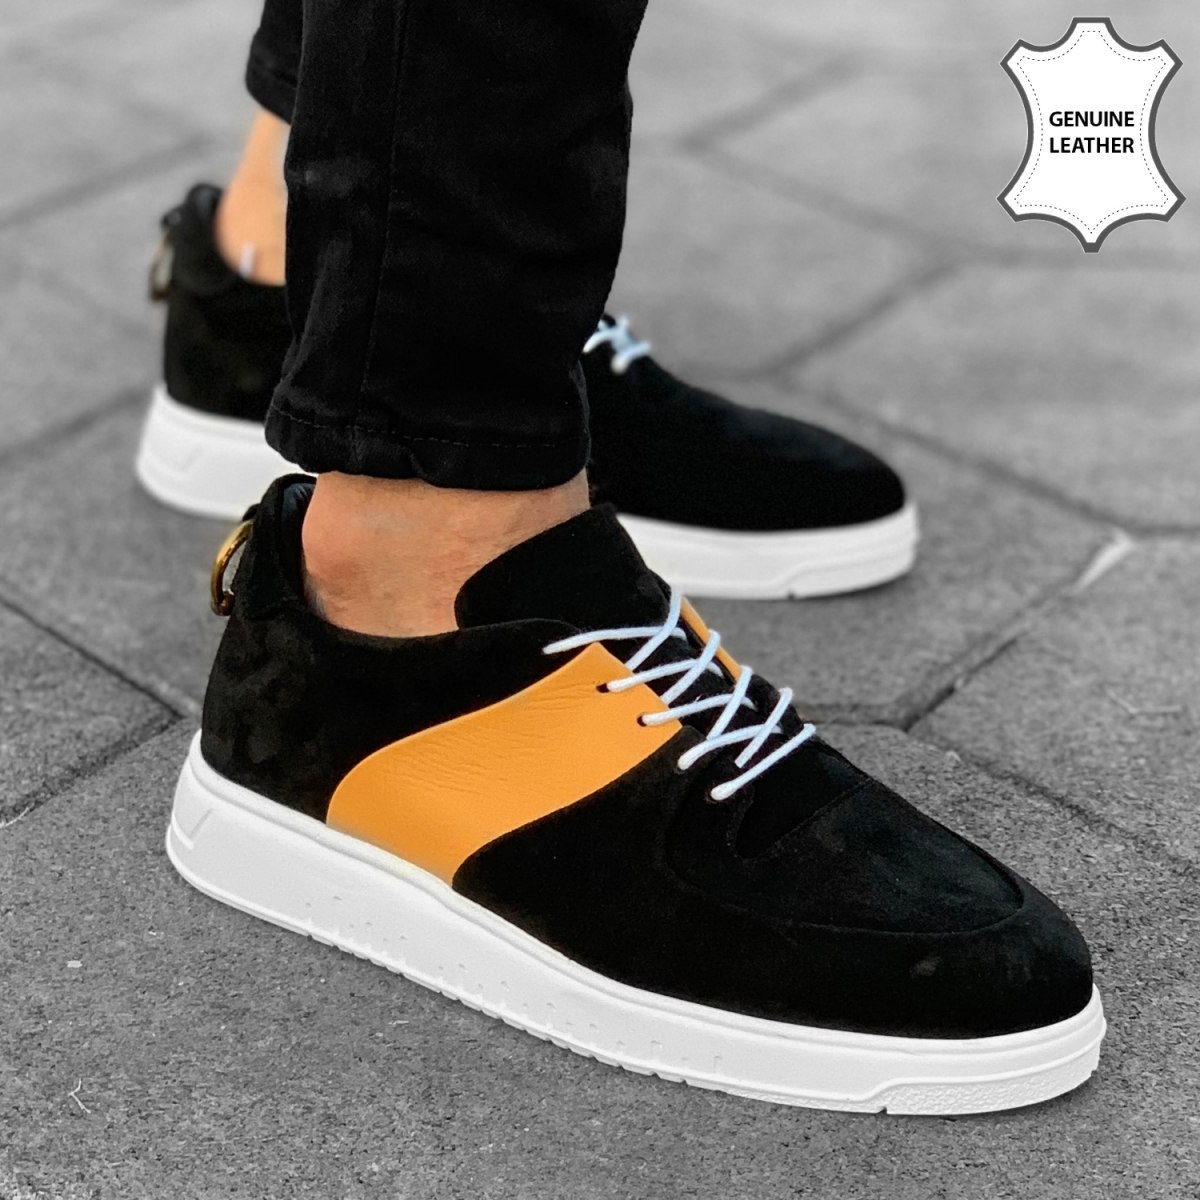 Martin Valen Men's Premium Genuine Leather Sneakers Black & Yellow